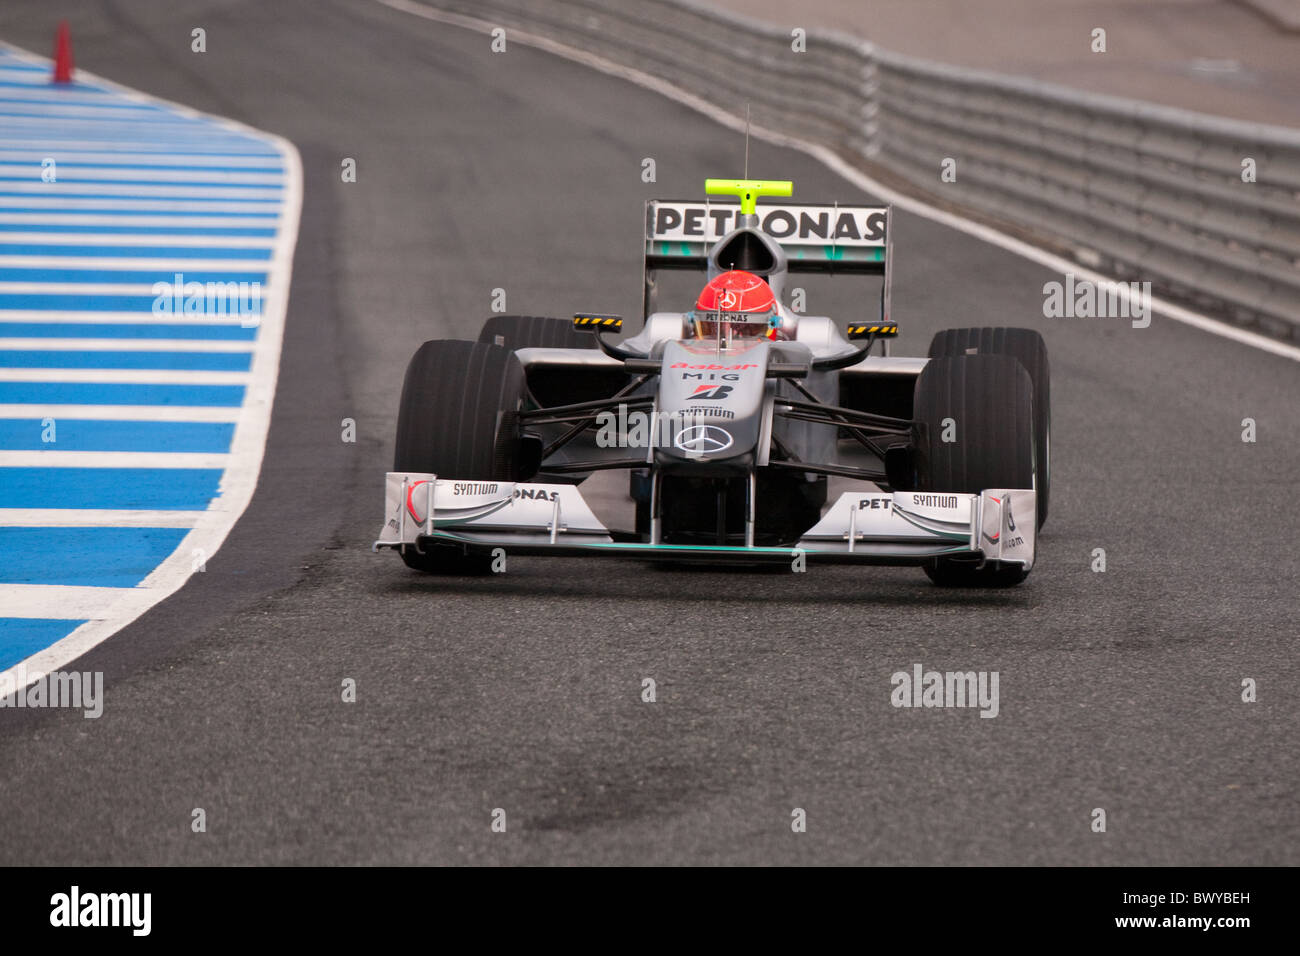 13.02.2010, Exit, Formel 1, Jerez, M. Schumacher, Mercedes, Boxengasse, Test, nass Stockfoto